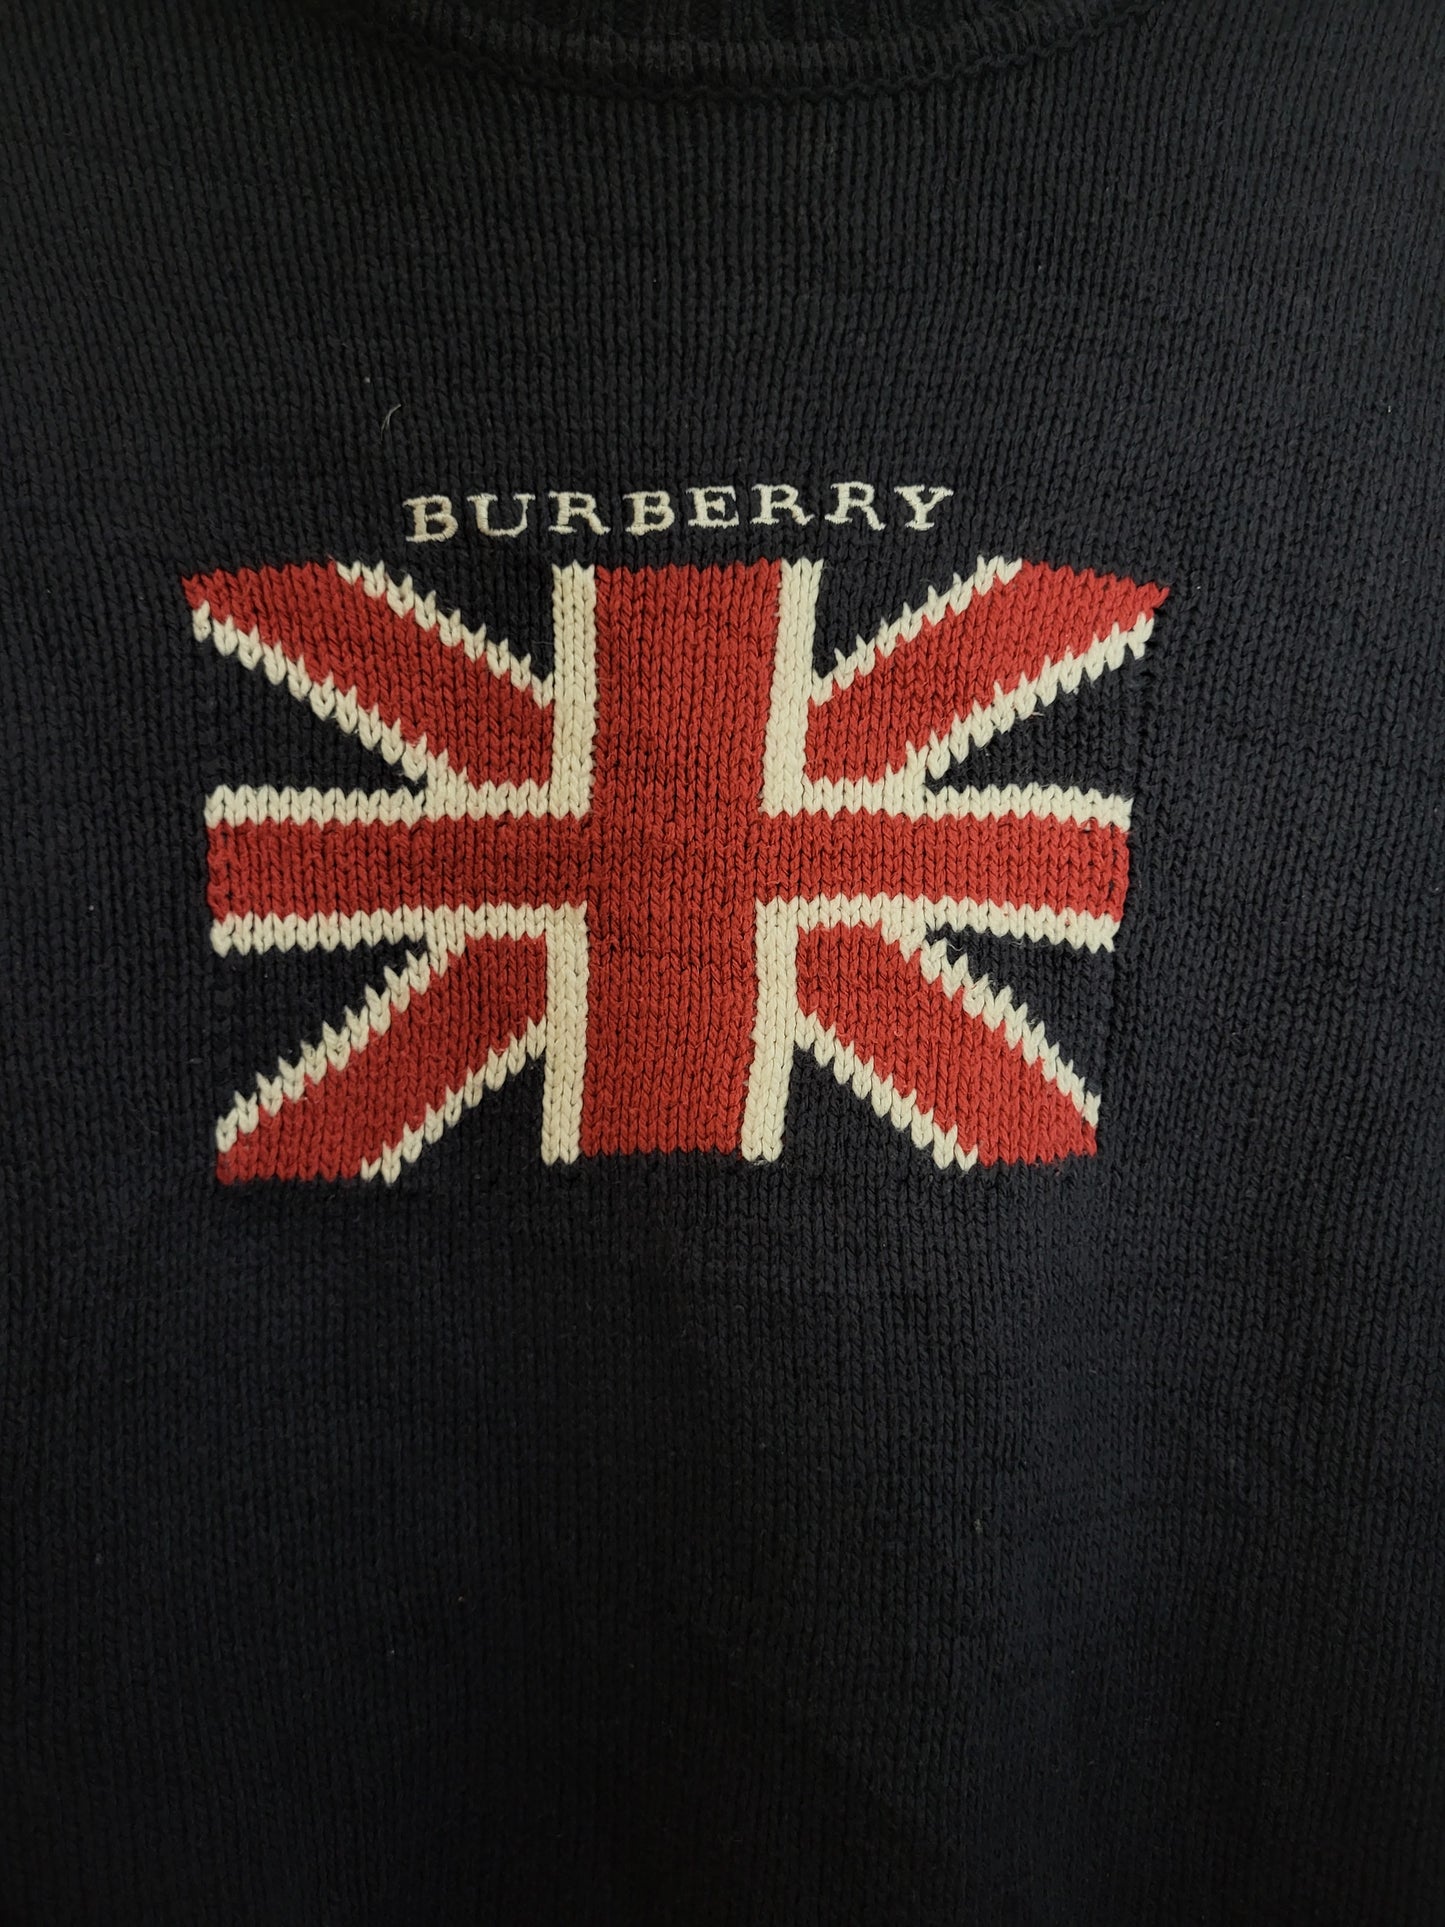 Burberry - Pullover - Klassisch mit Logo - Vintage - Dunkelblau - Herren - XS